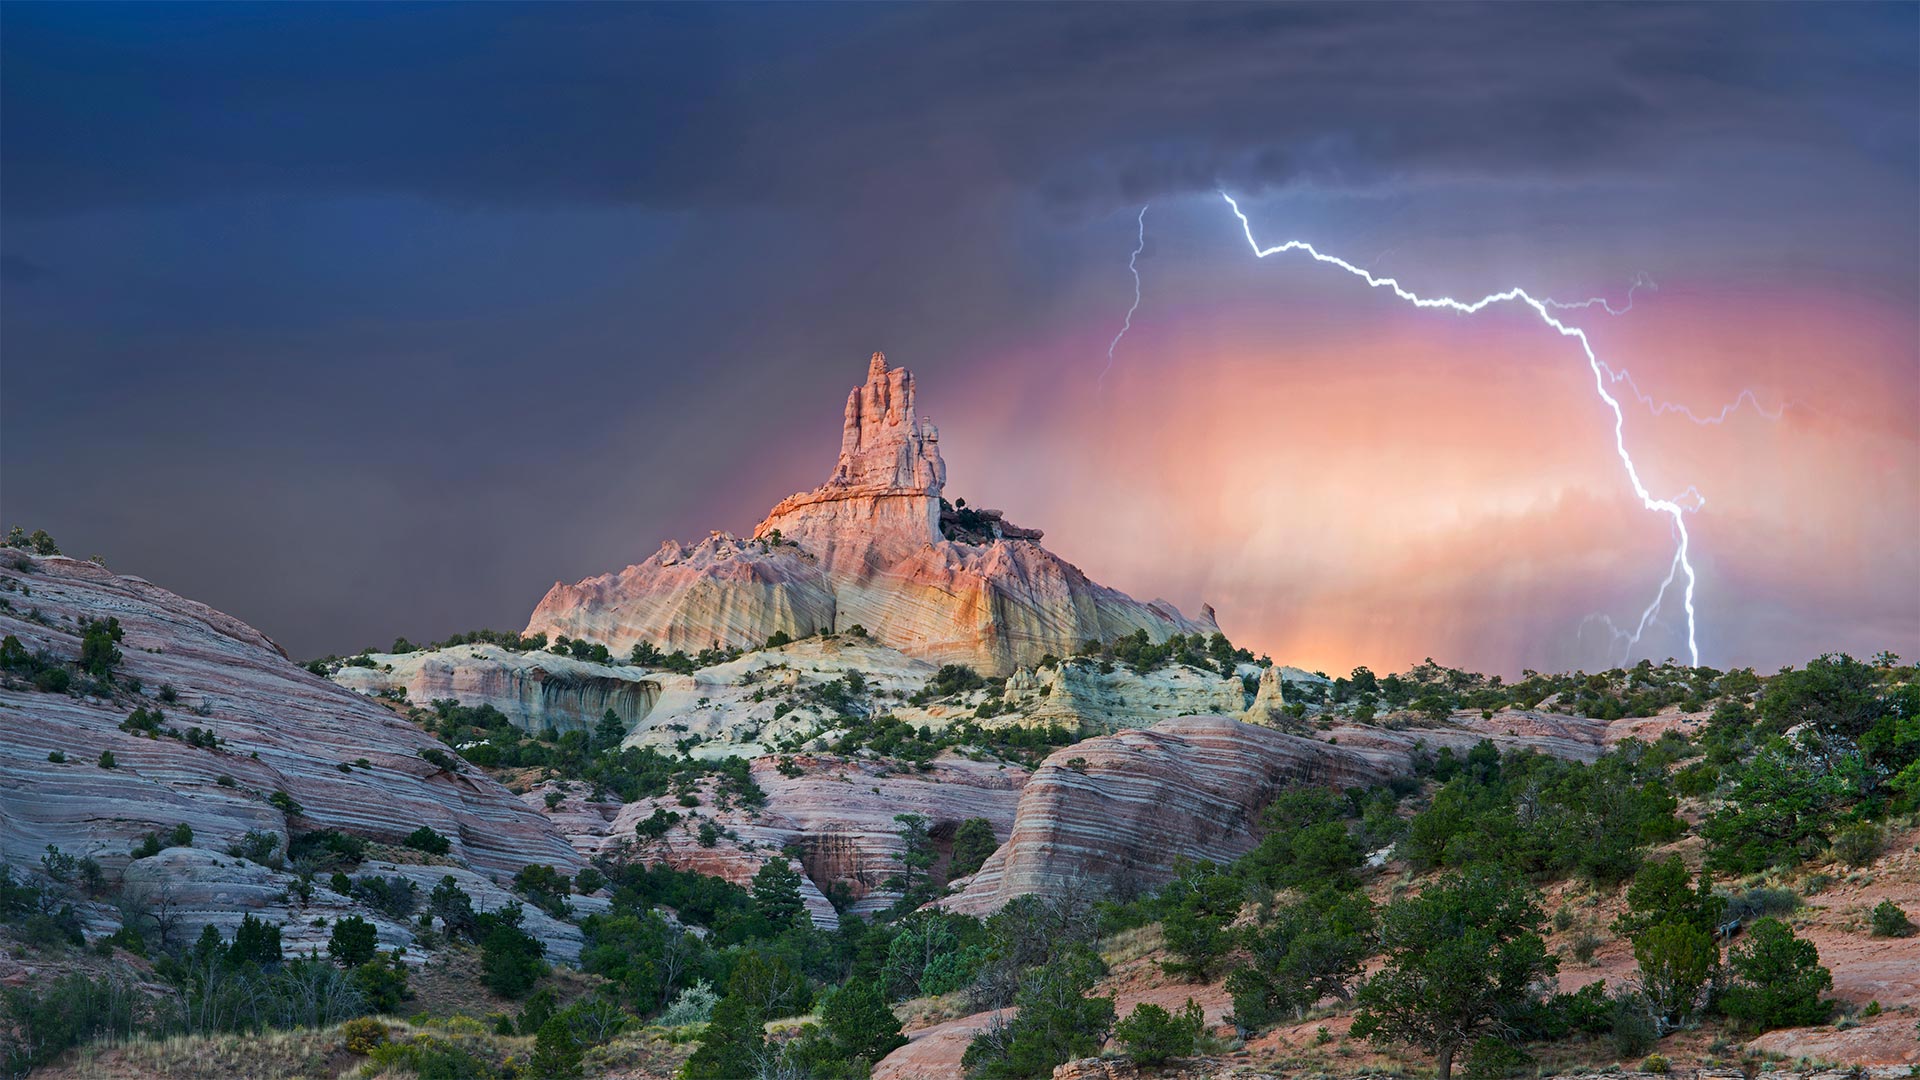 Lightning strikes near Church Rock, New Mexico - Tim Fitzharris